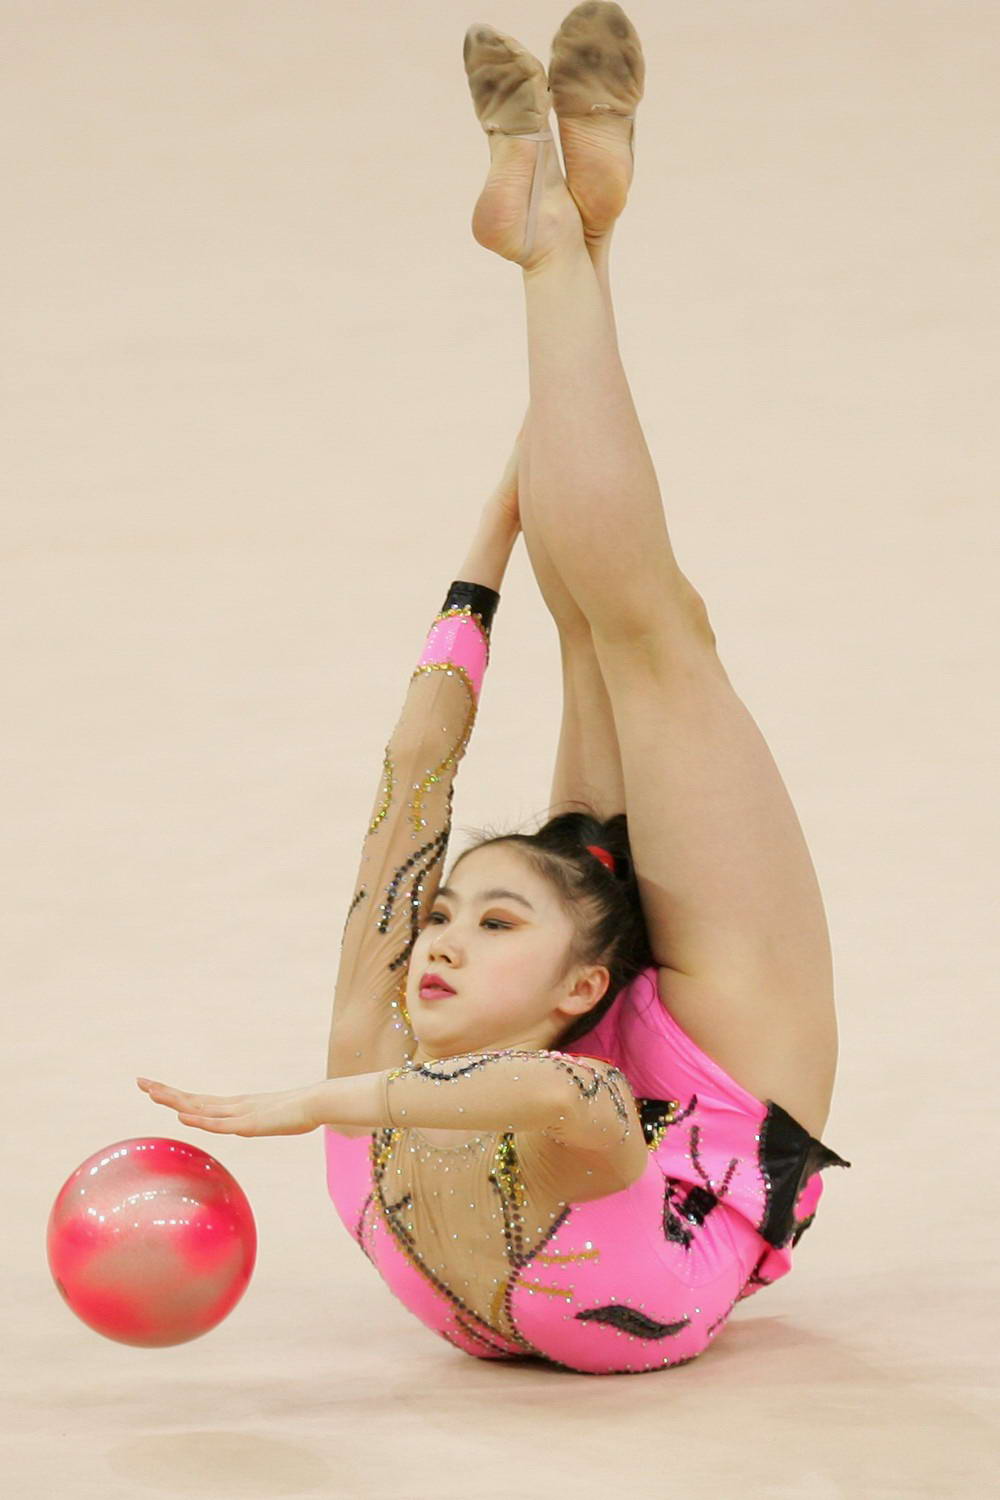 rhythmic gymnastics woman bent backwards bouncing ball